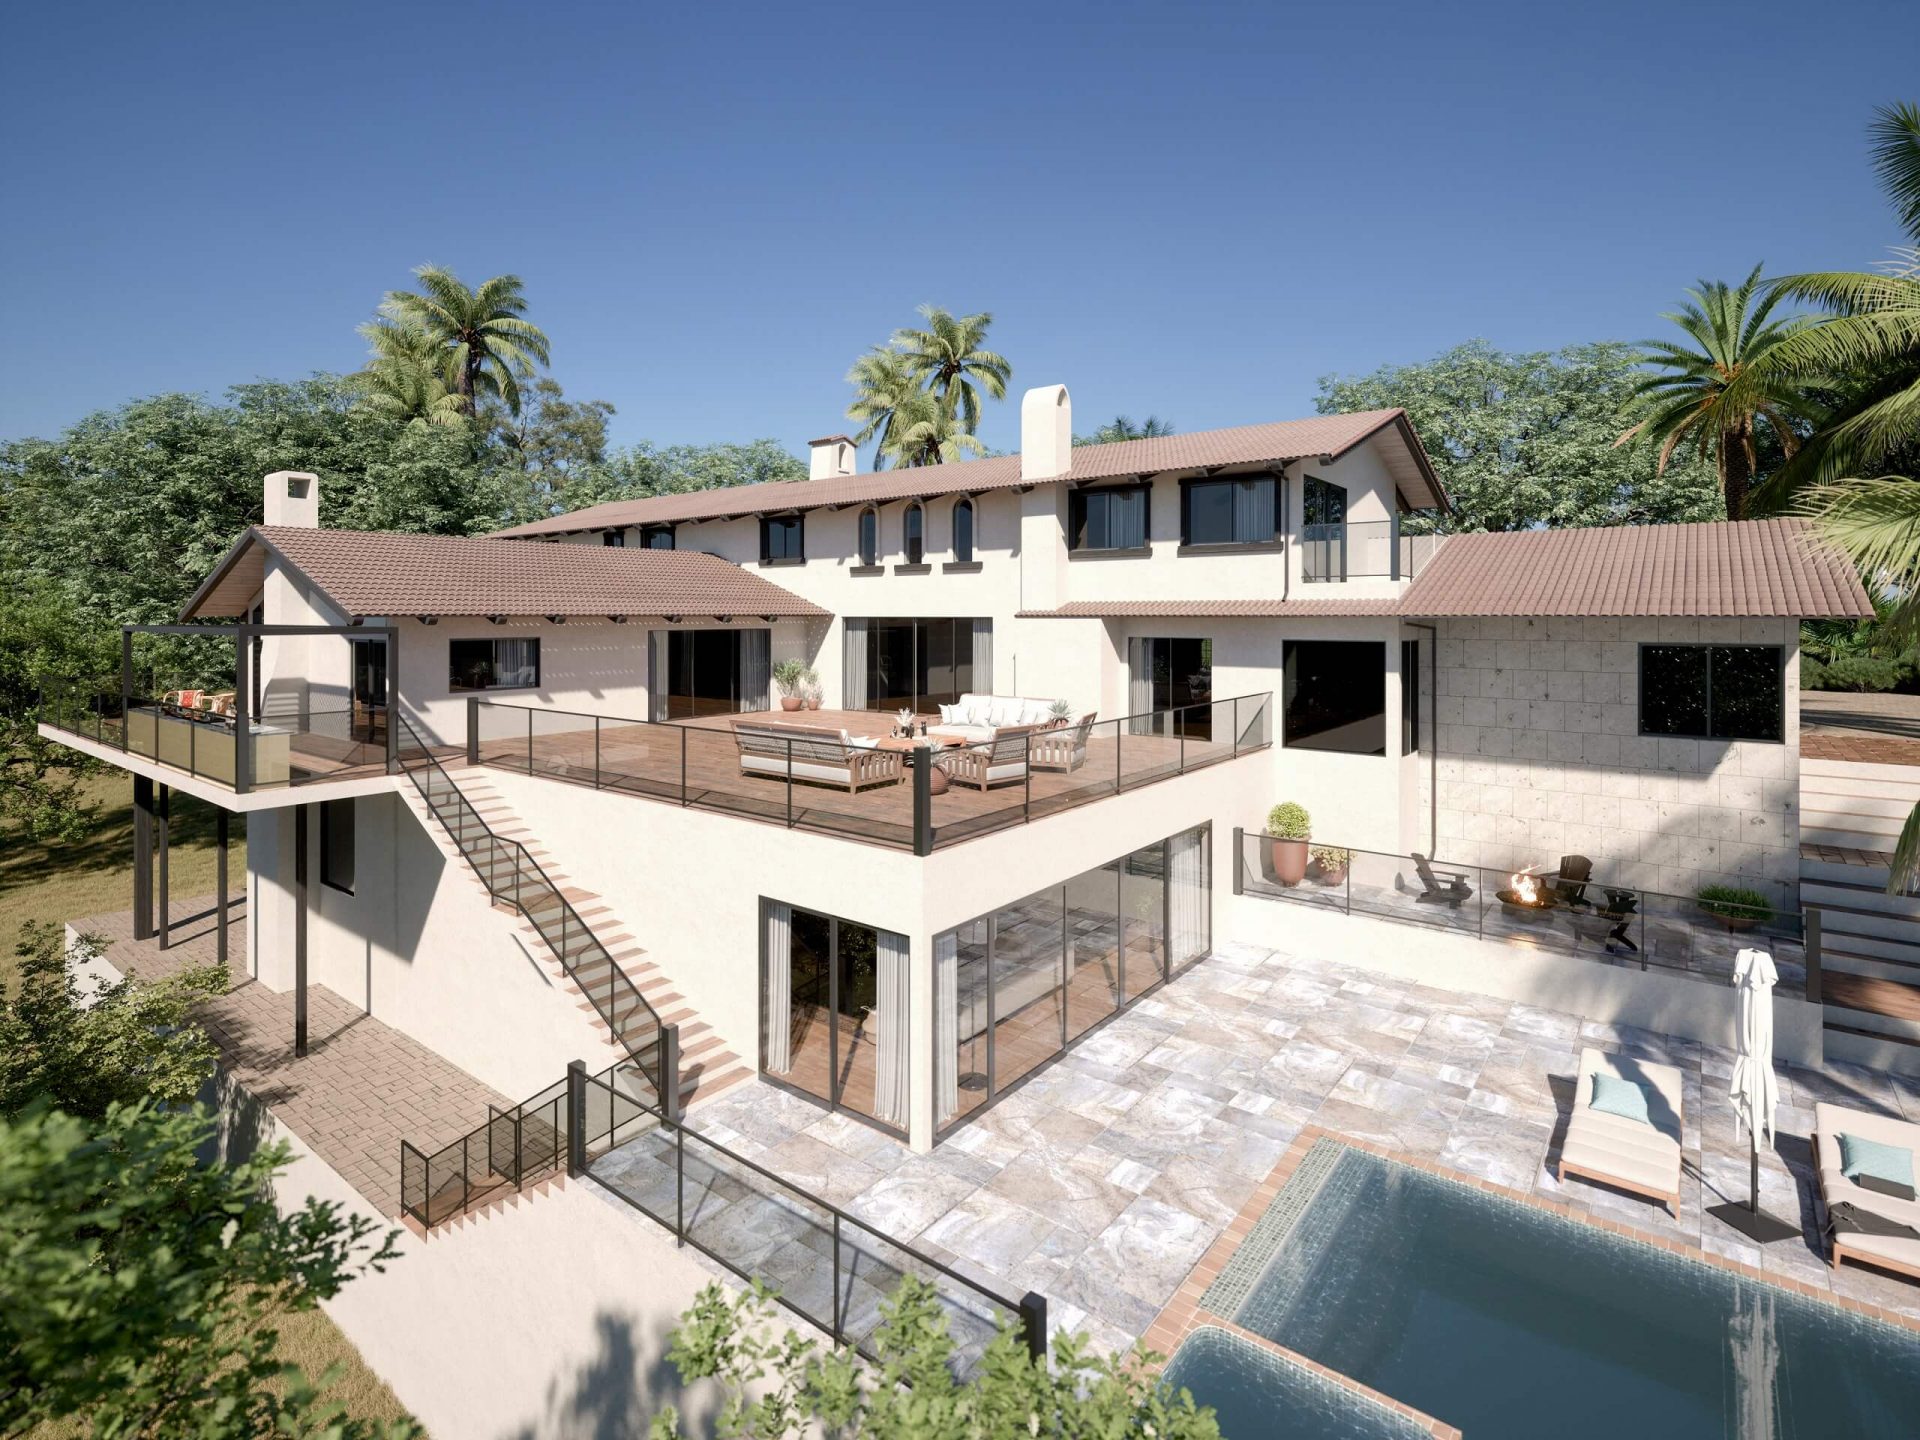 Photorealistic 3D Visualization for a Villa